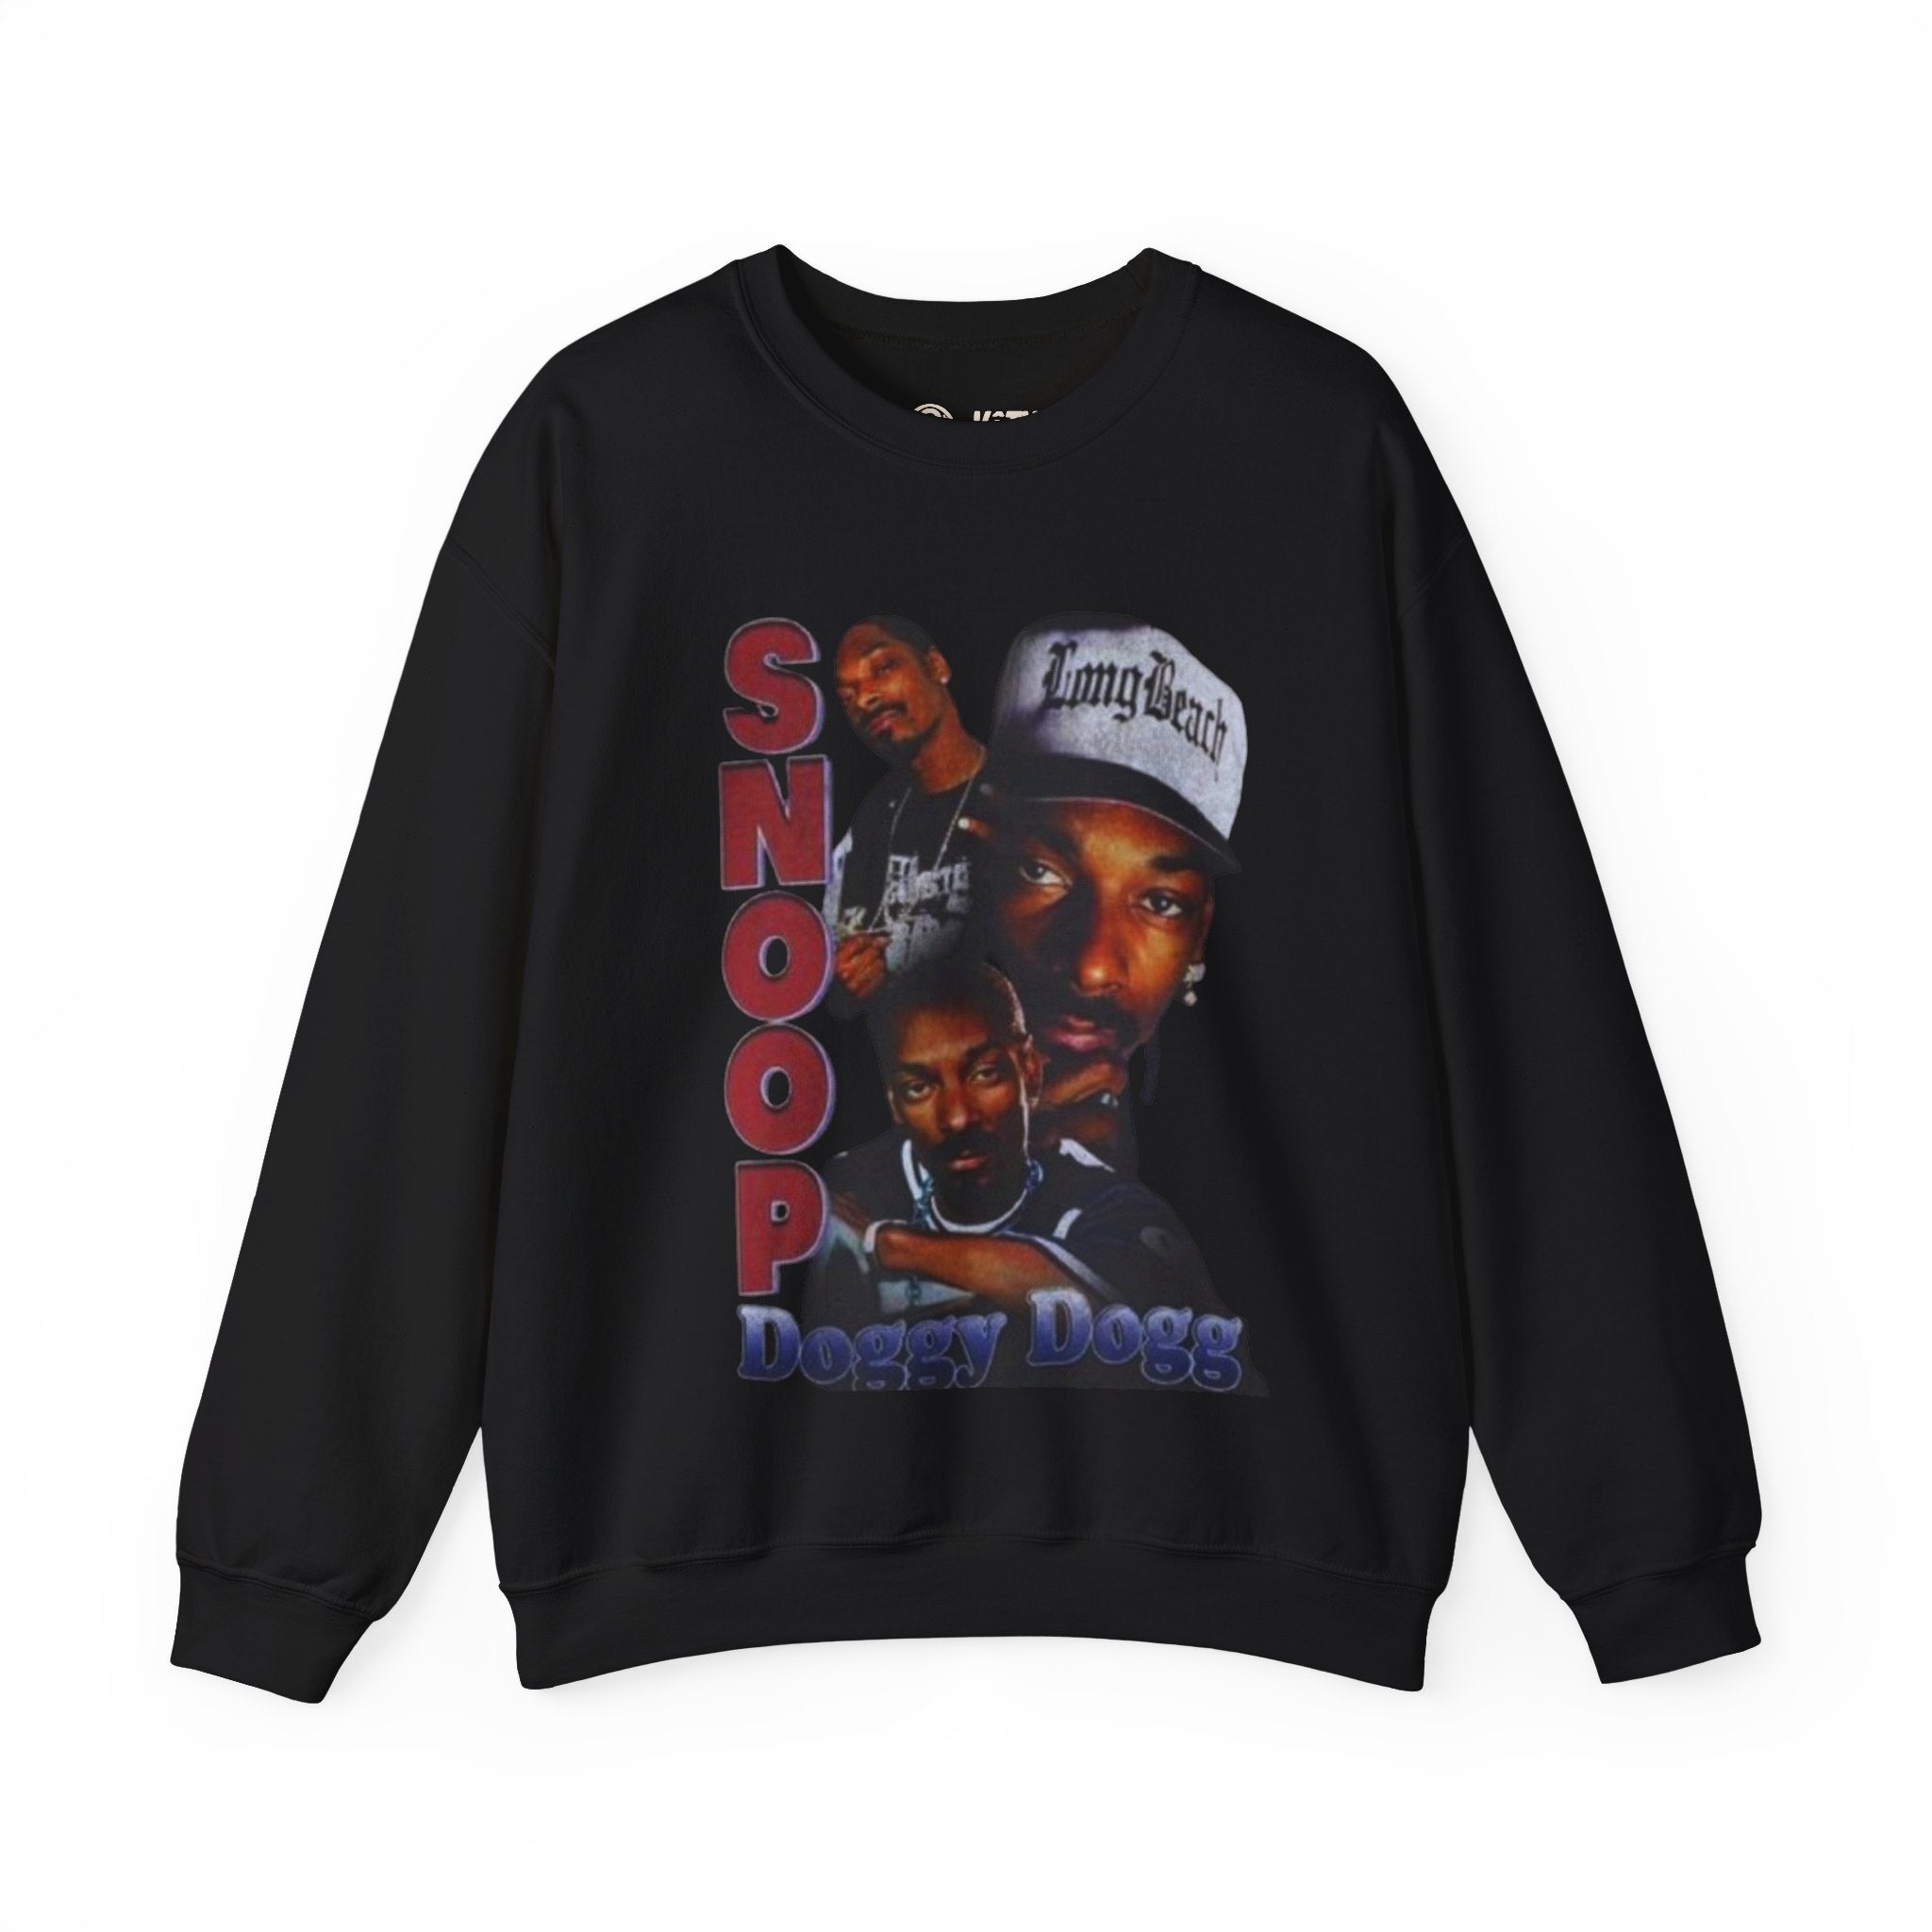 Snoop Dogg "Long Beach" Sweatshirt